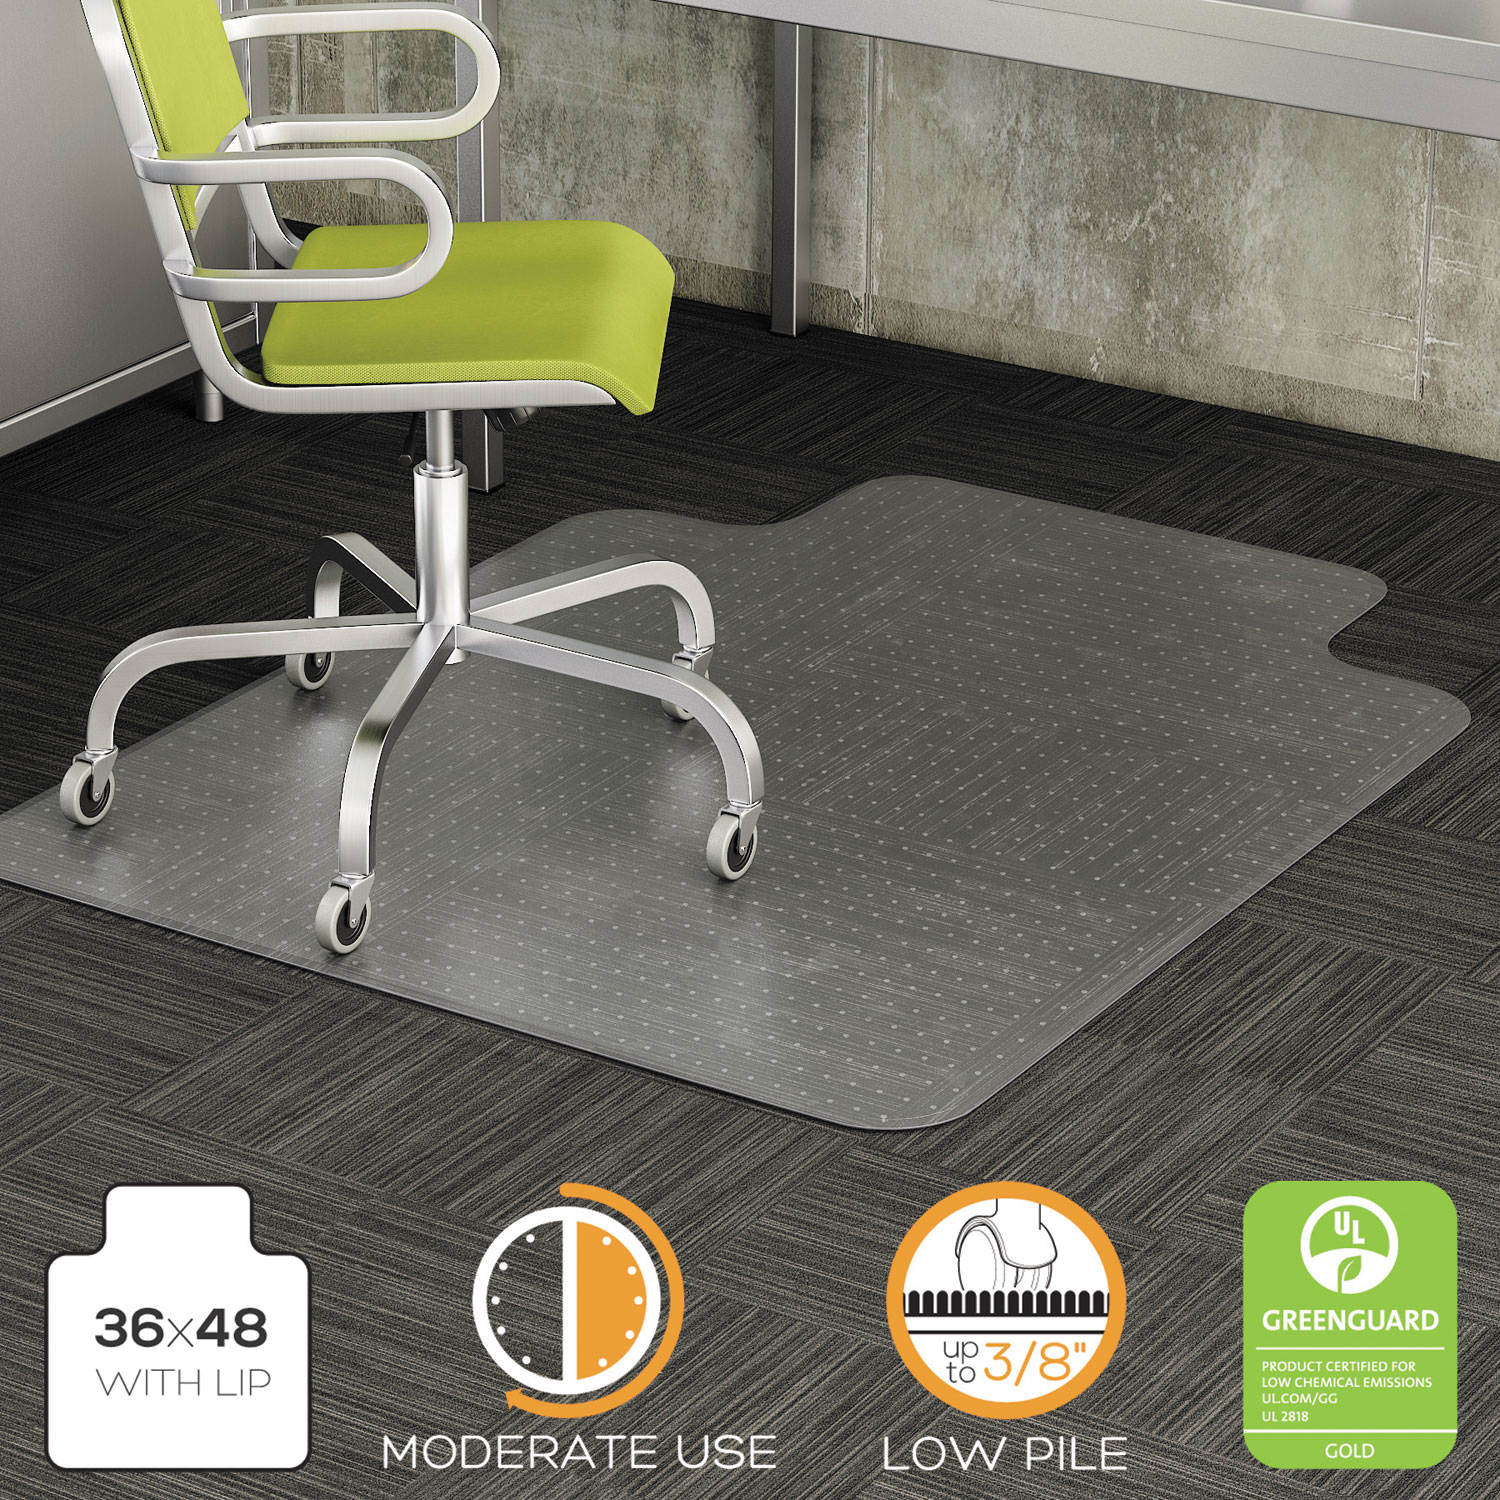  deflecto CM13113COM DuraMat Moderate Use Chair Mat, Low Pile Carpet, Roll, 36 x 48, Lipped, Clear (DEFCM13113COM) 